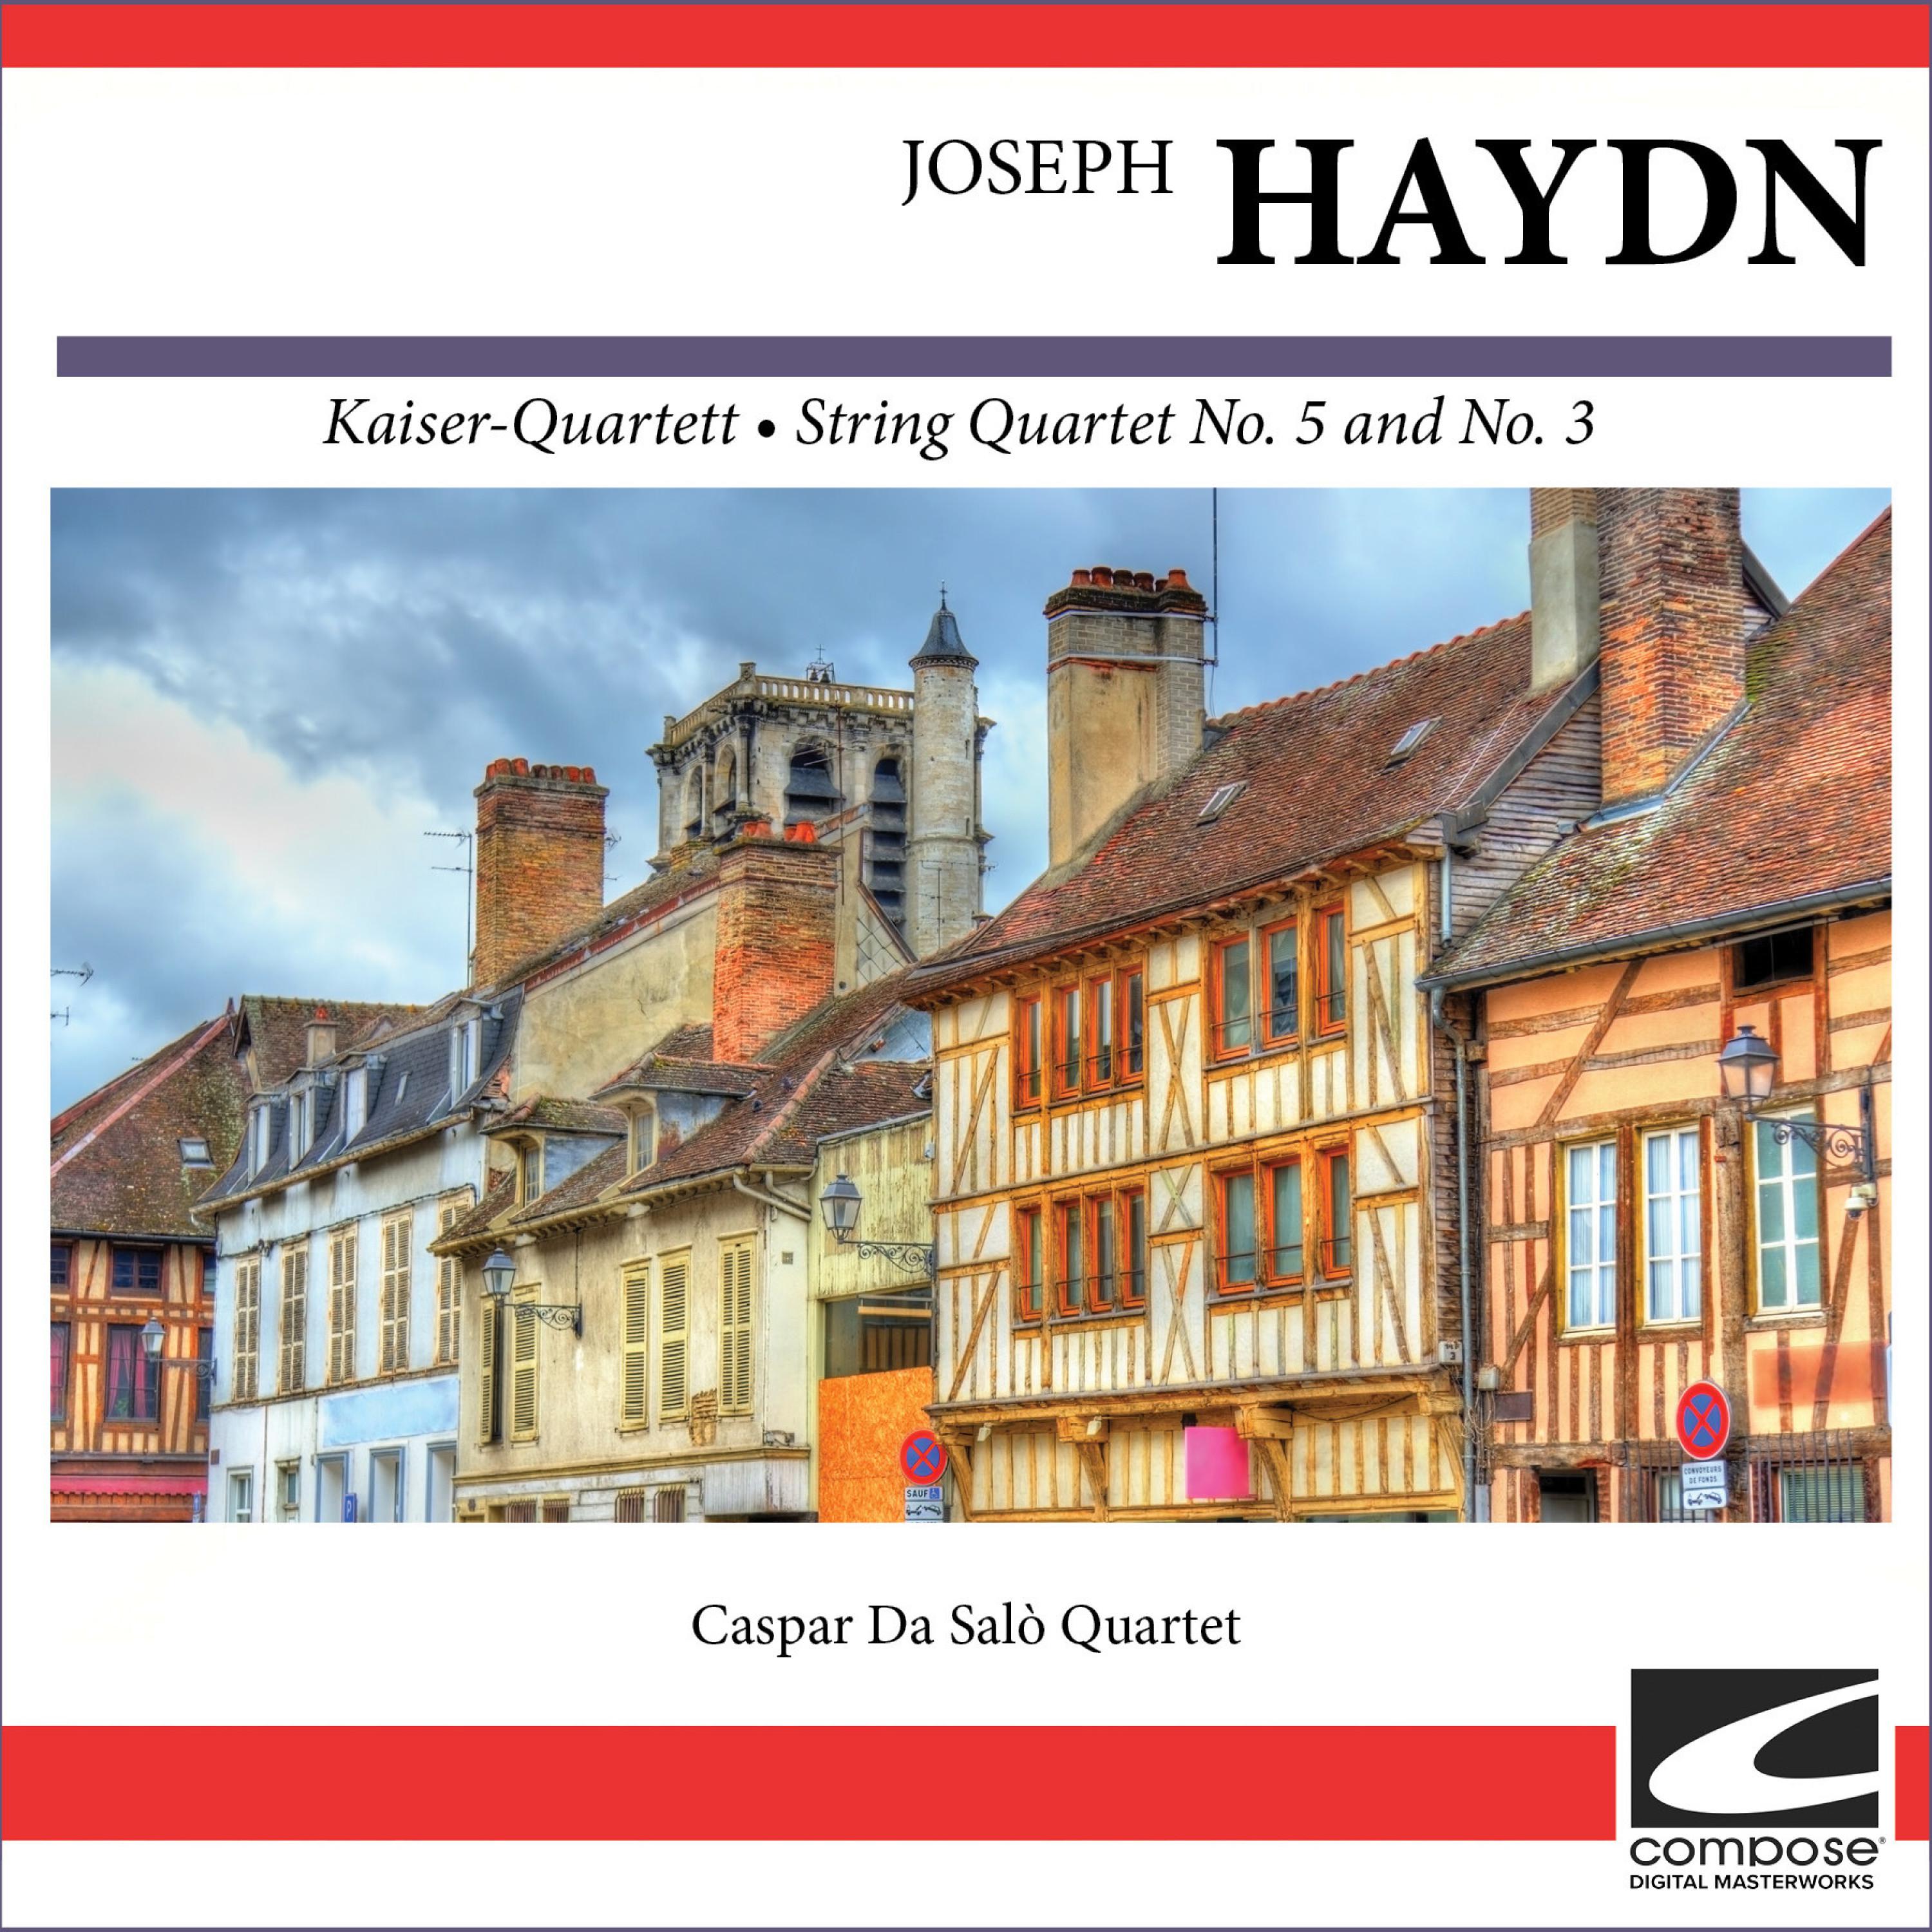 Caspar da Salo Quartet - Haydn String Quartet Op. 64 no. 5 in D major 'Lark Quartet' - Allegro moderato